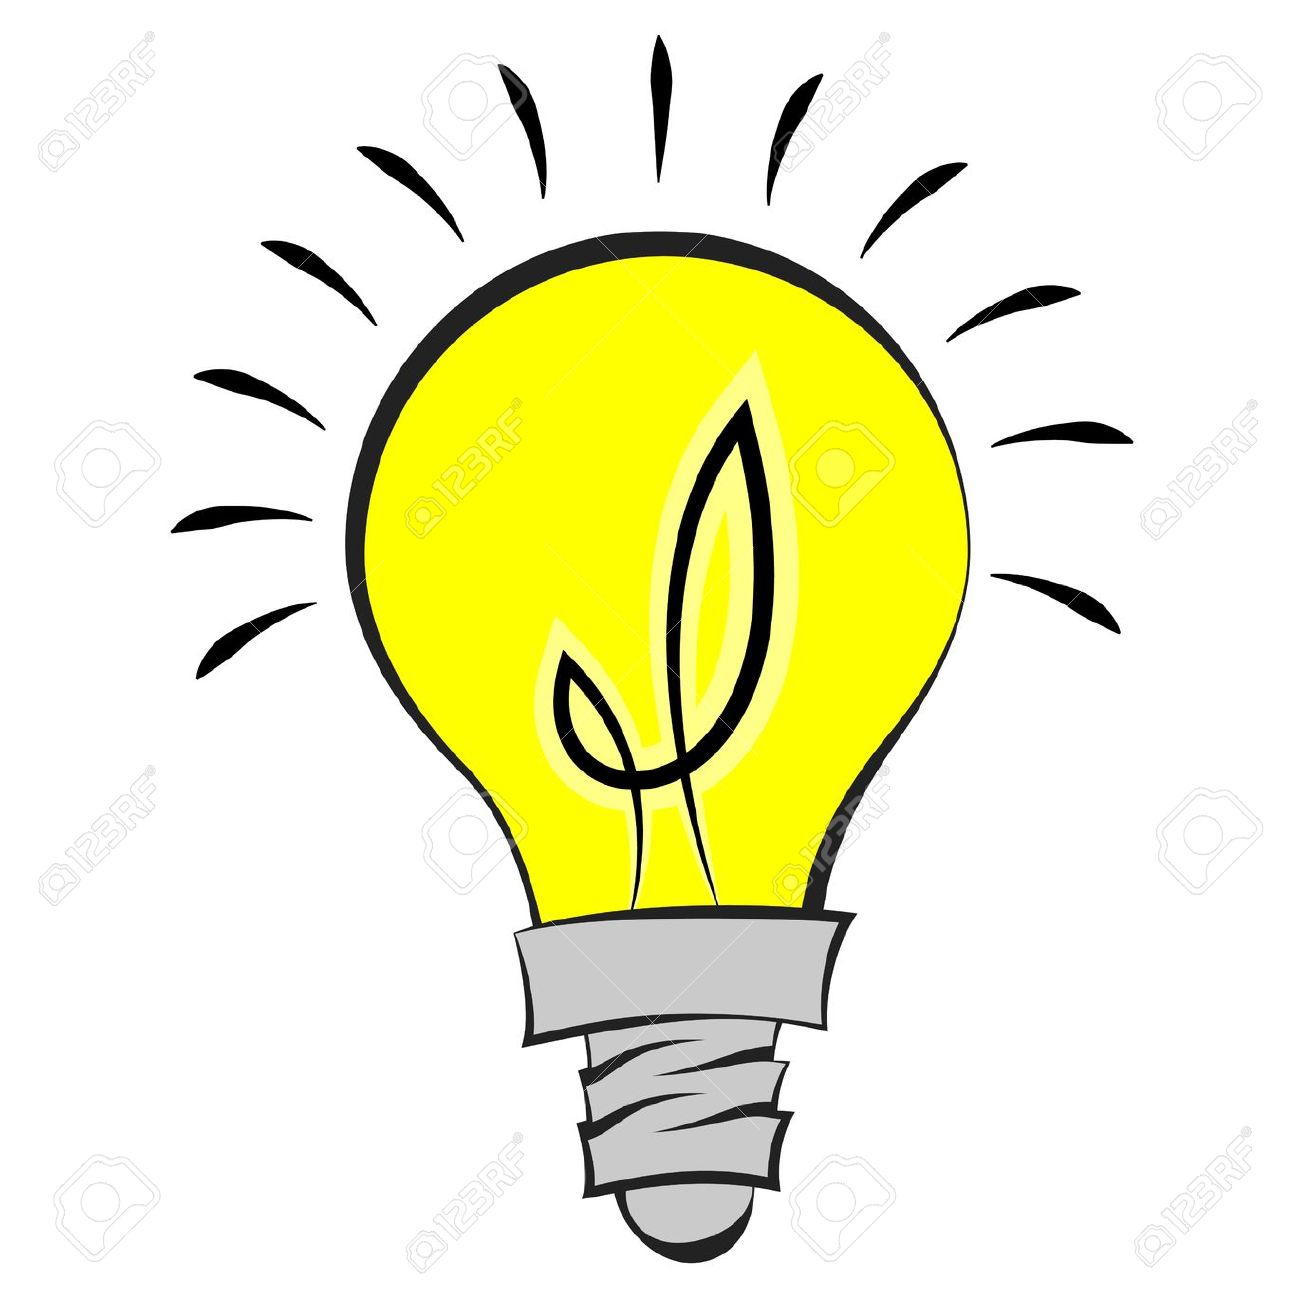 Thinking Light Bulb Clip Art Illustration Of A Comic Style Light Bulb